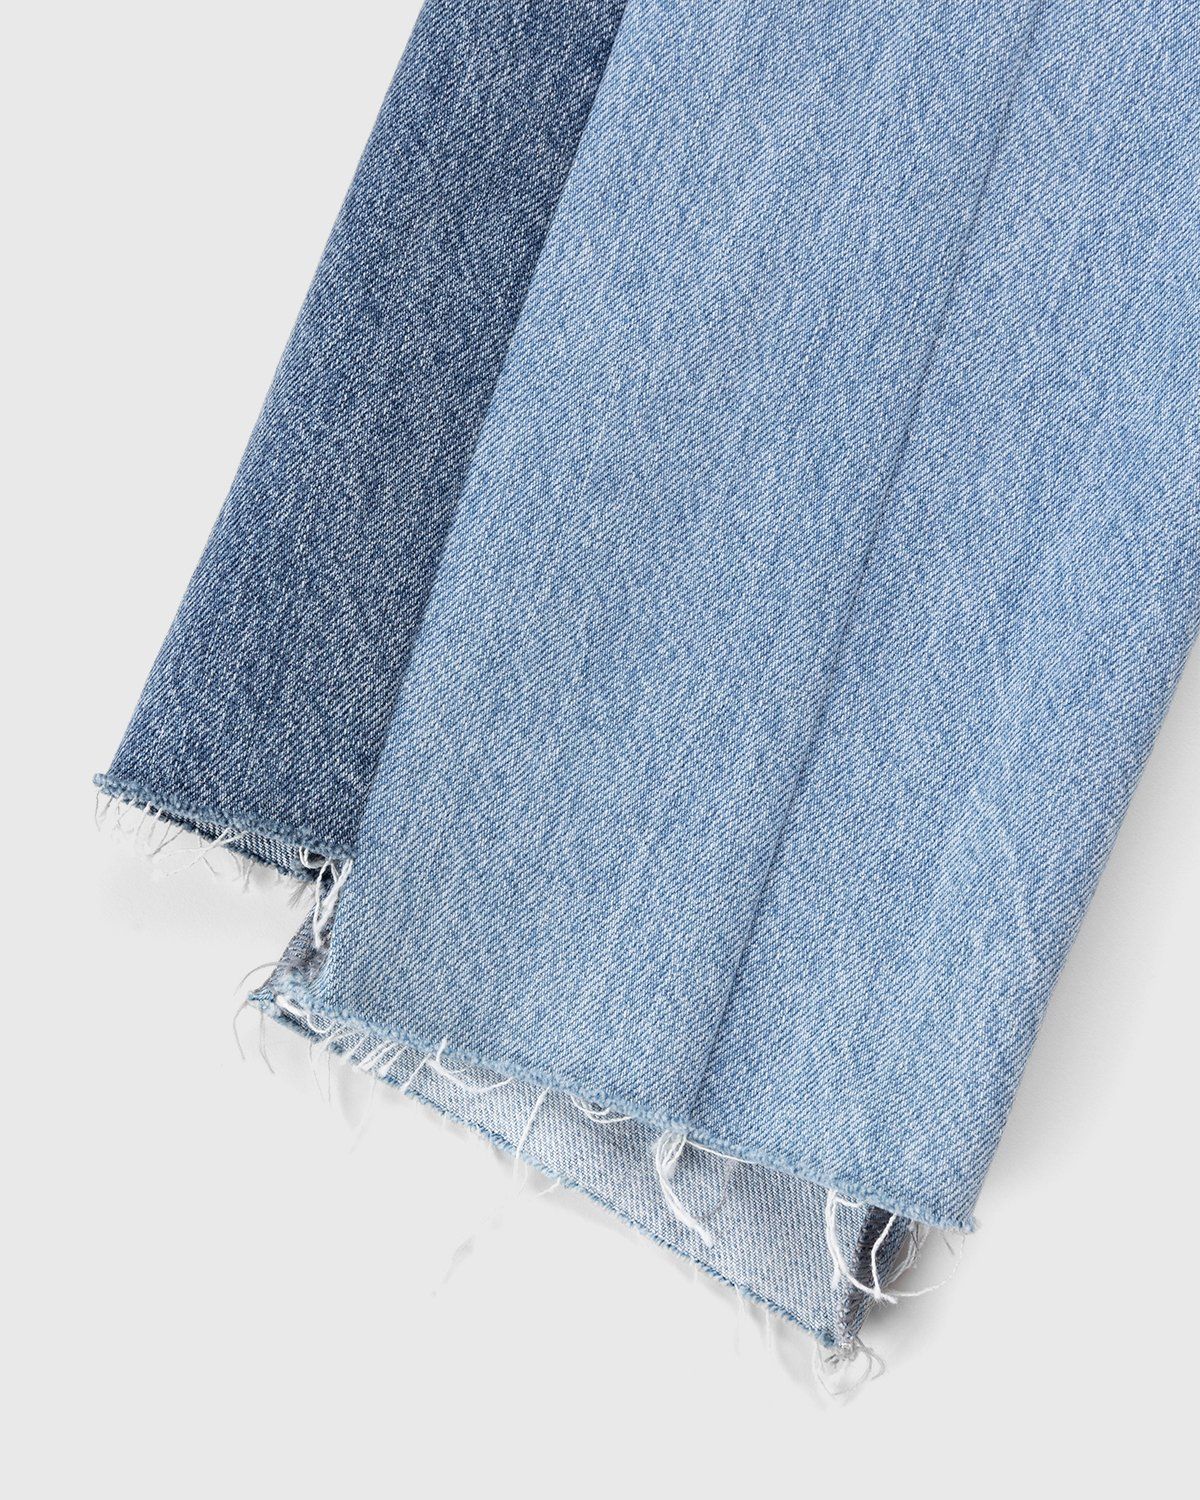 Maison Margiela – Spliced Jeans Blue - Denim - Blue - Image 6